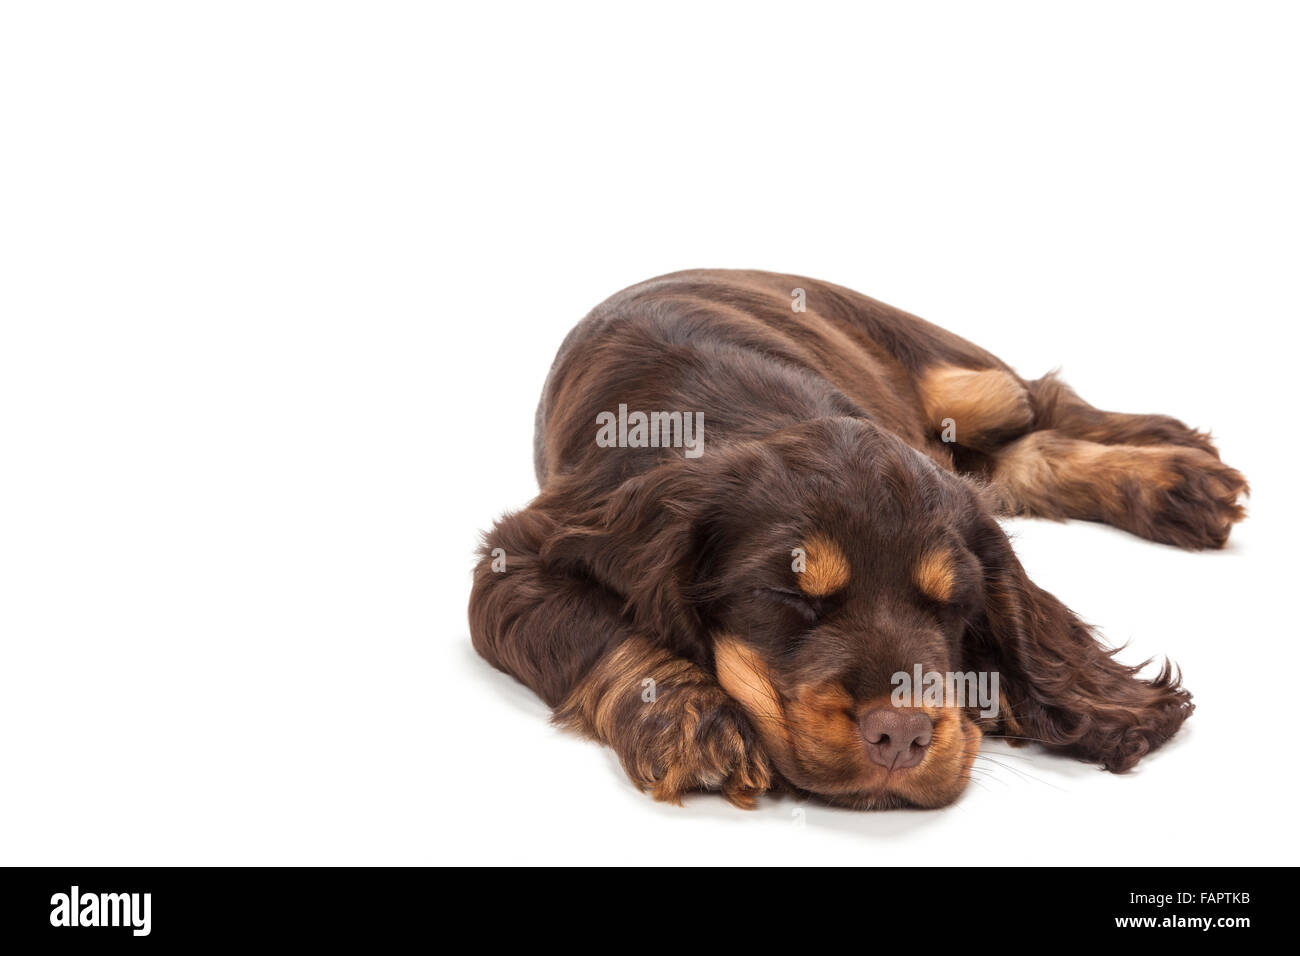 Cute Cocker Spaniel puppy dog sleeping Stock Photo